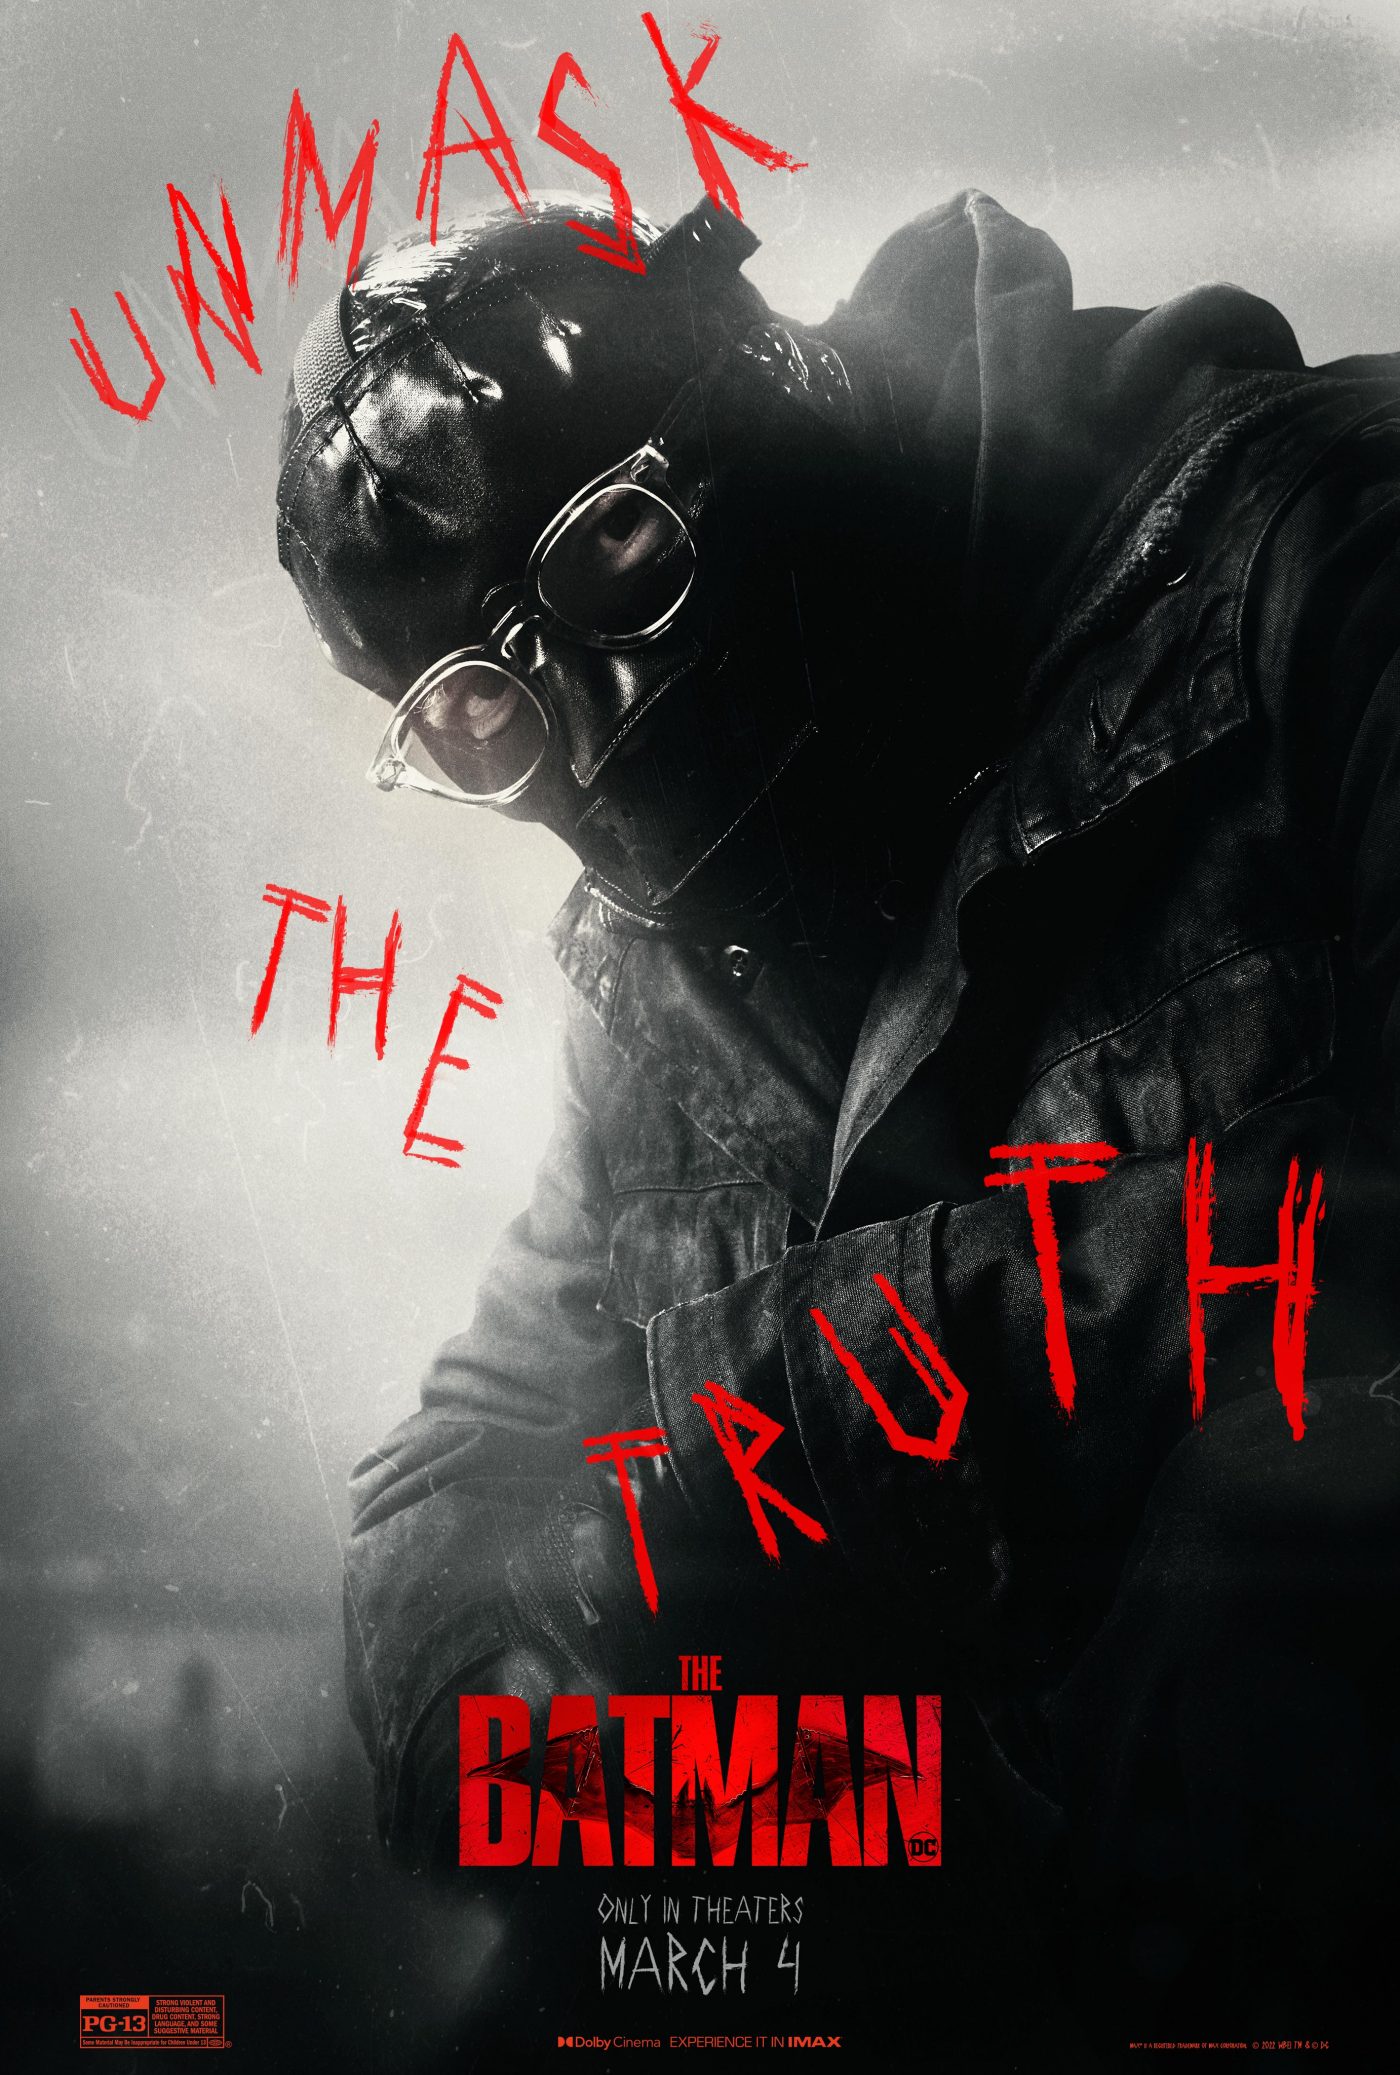 The Batman character poster